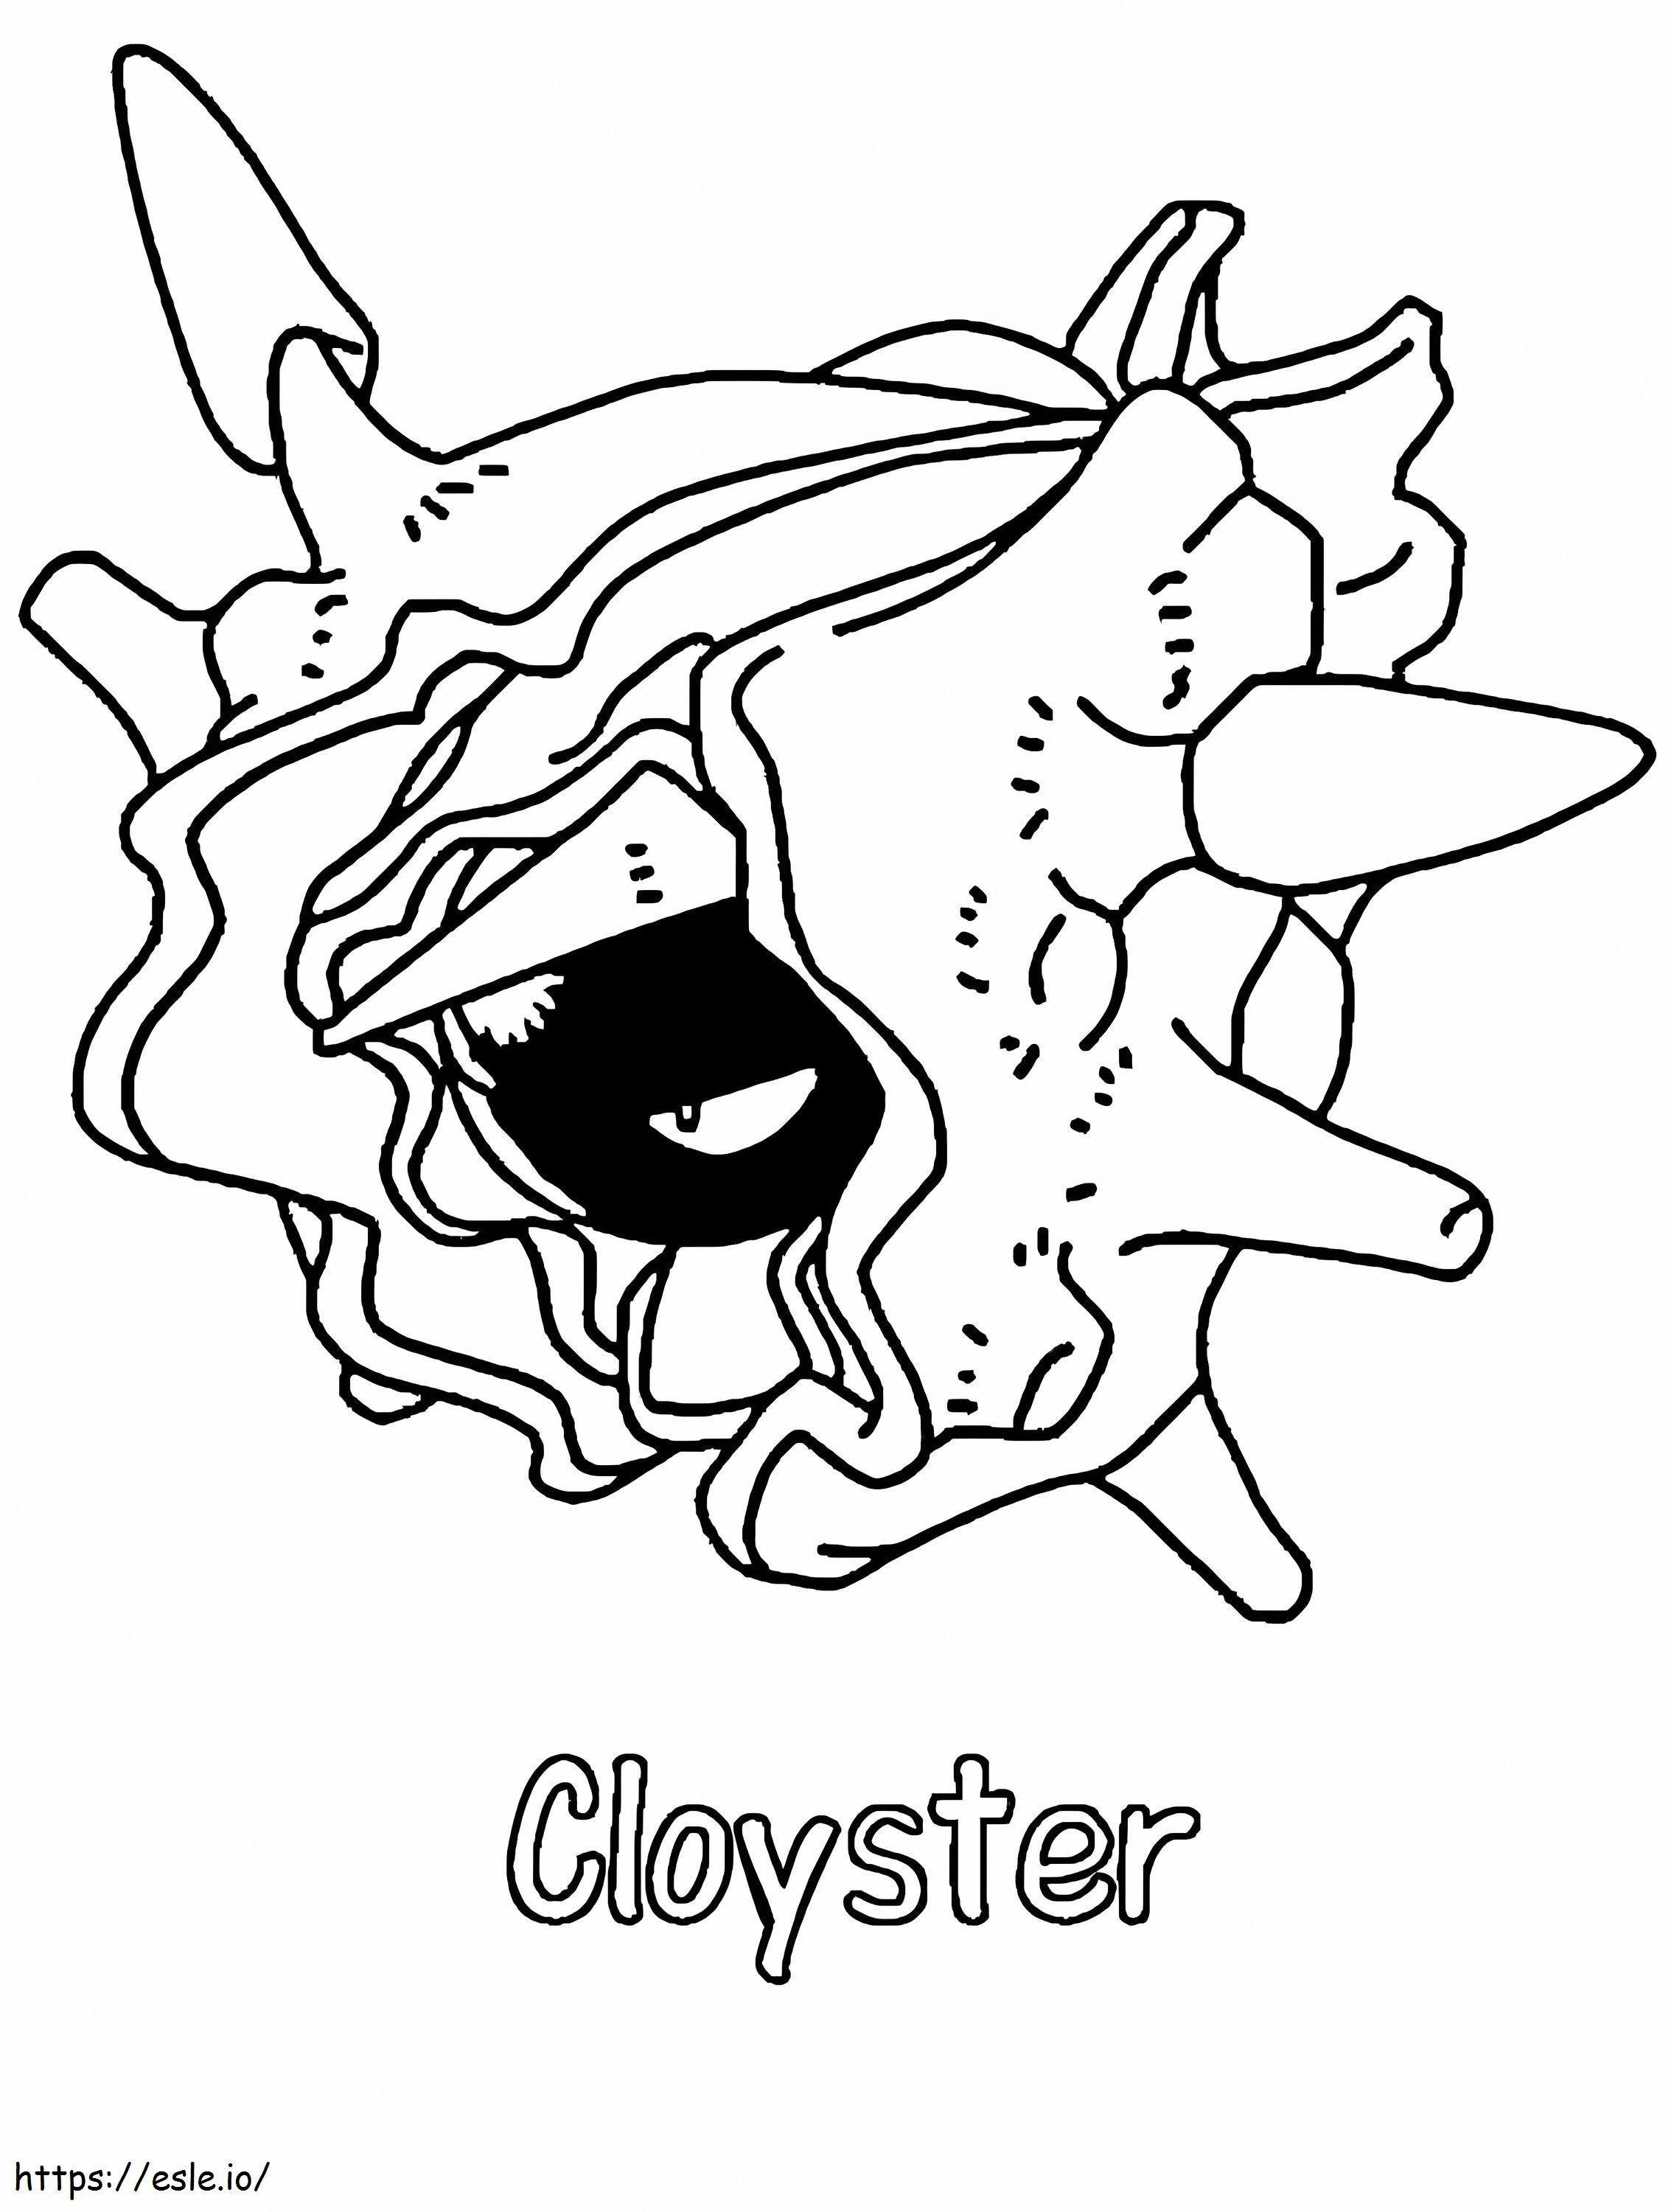 Cloyster Pokemonu boyama